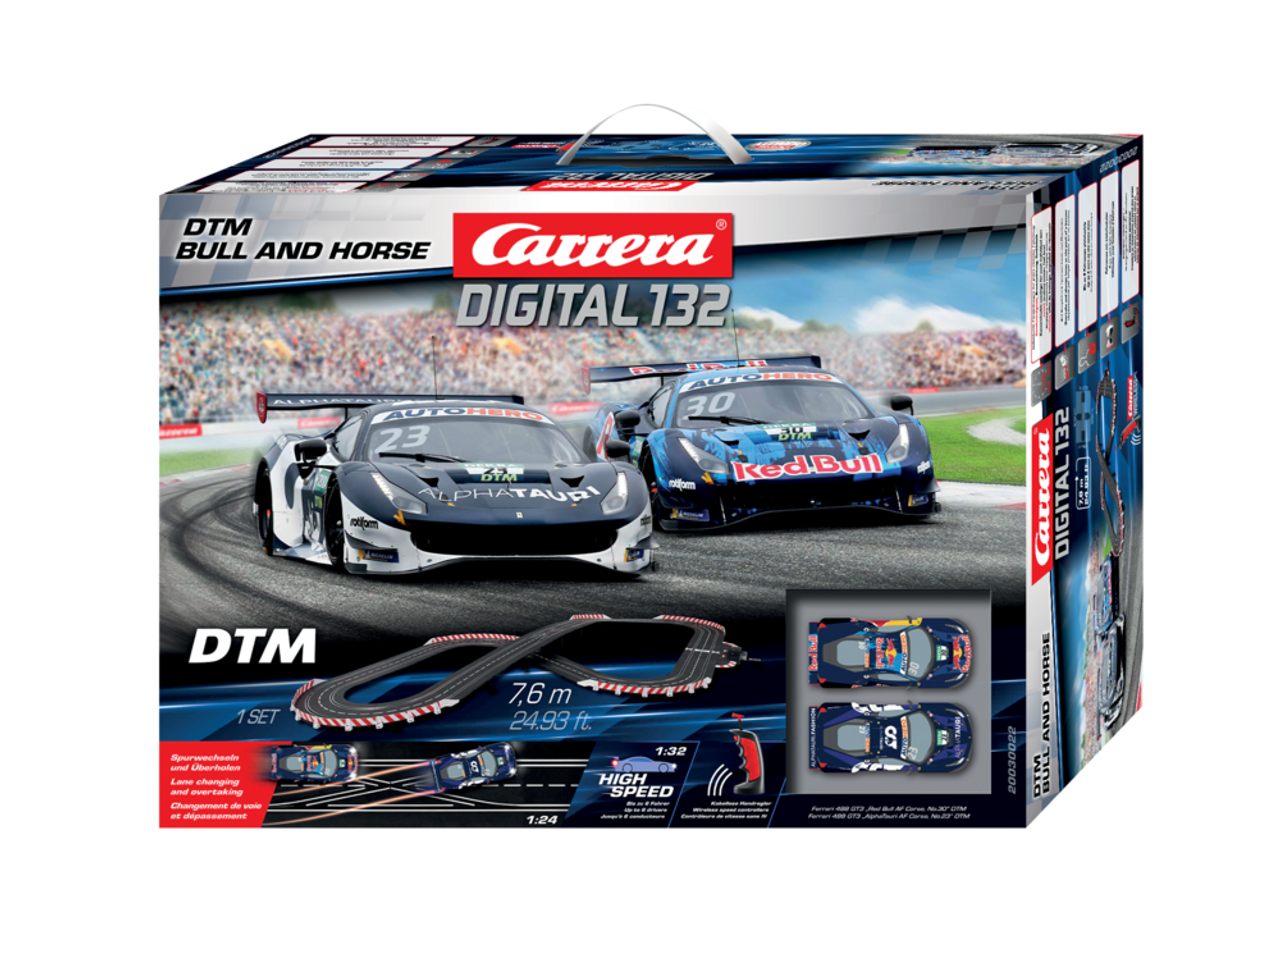 30022 Carrera Digital 132 DTM Bull and Horse 1:32 Slot Car Racing Set -  Great Traditions